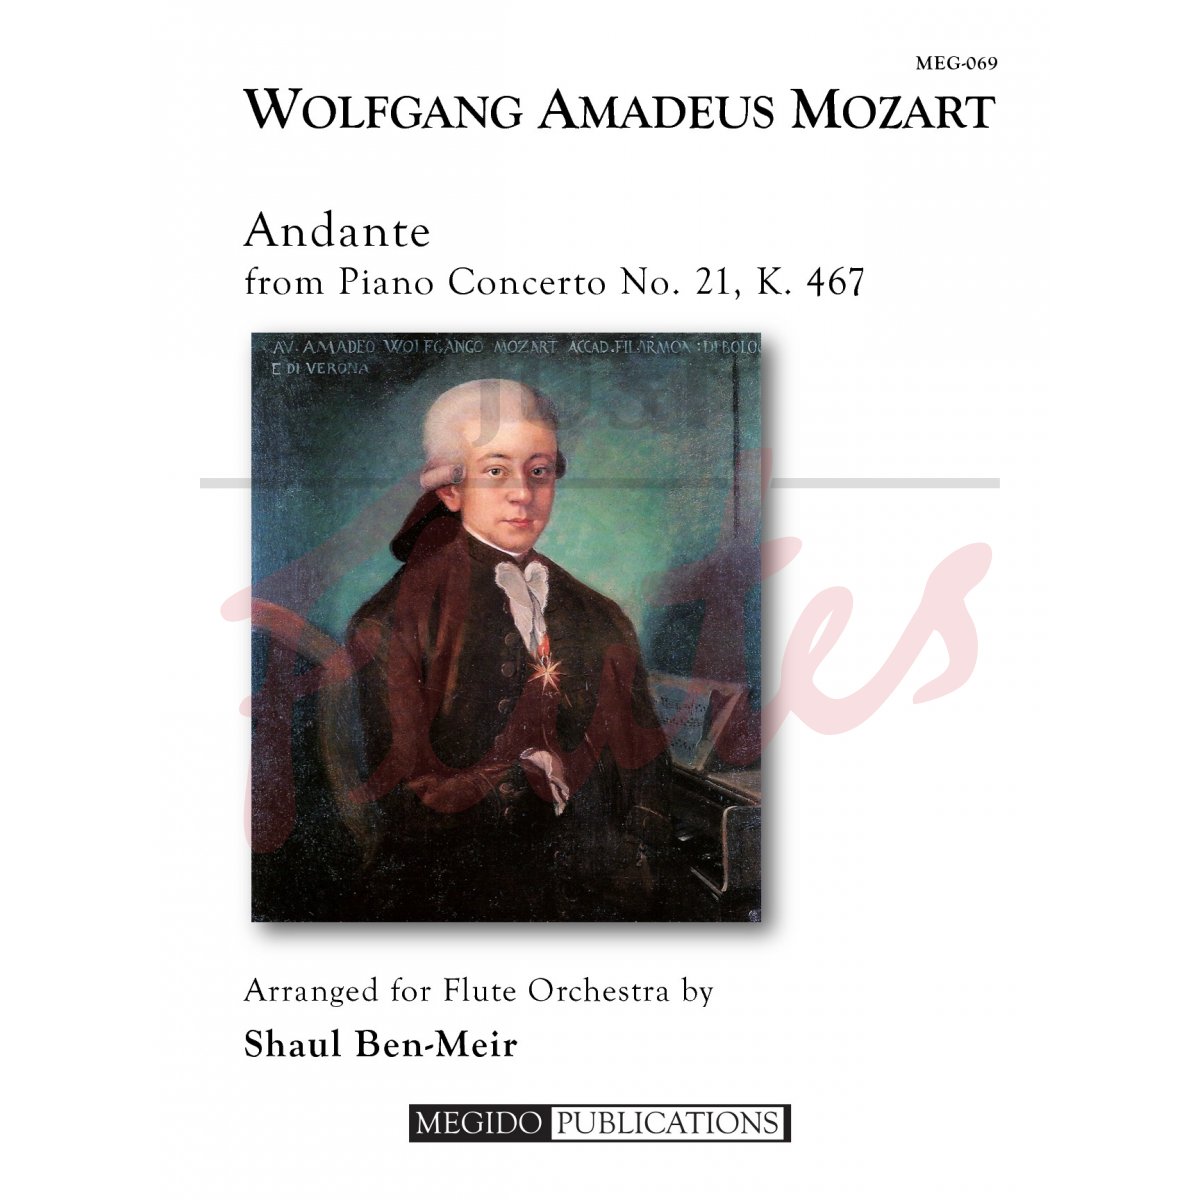 Andante from Piano Concerto No. 21